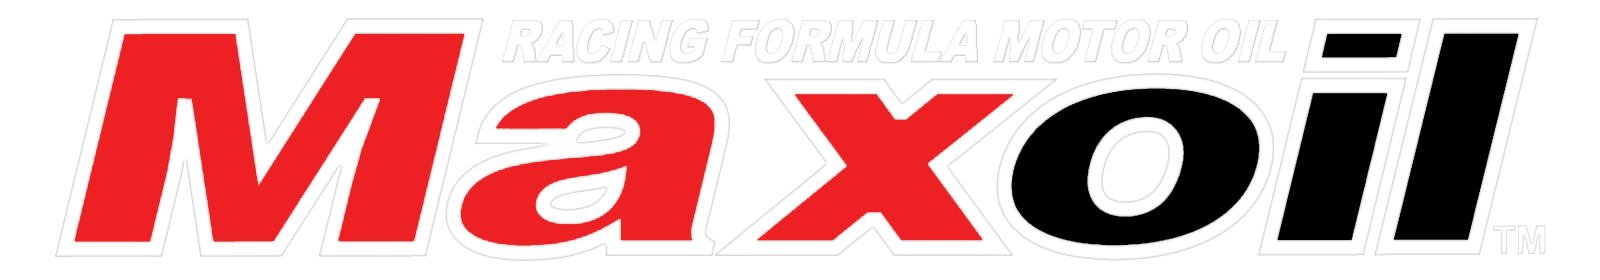 Maxoil Online Store by EPFMy – Racing Formula Motor Oil, since 1992